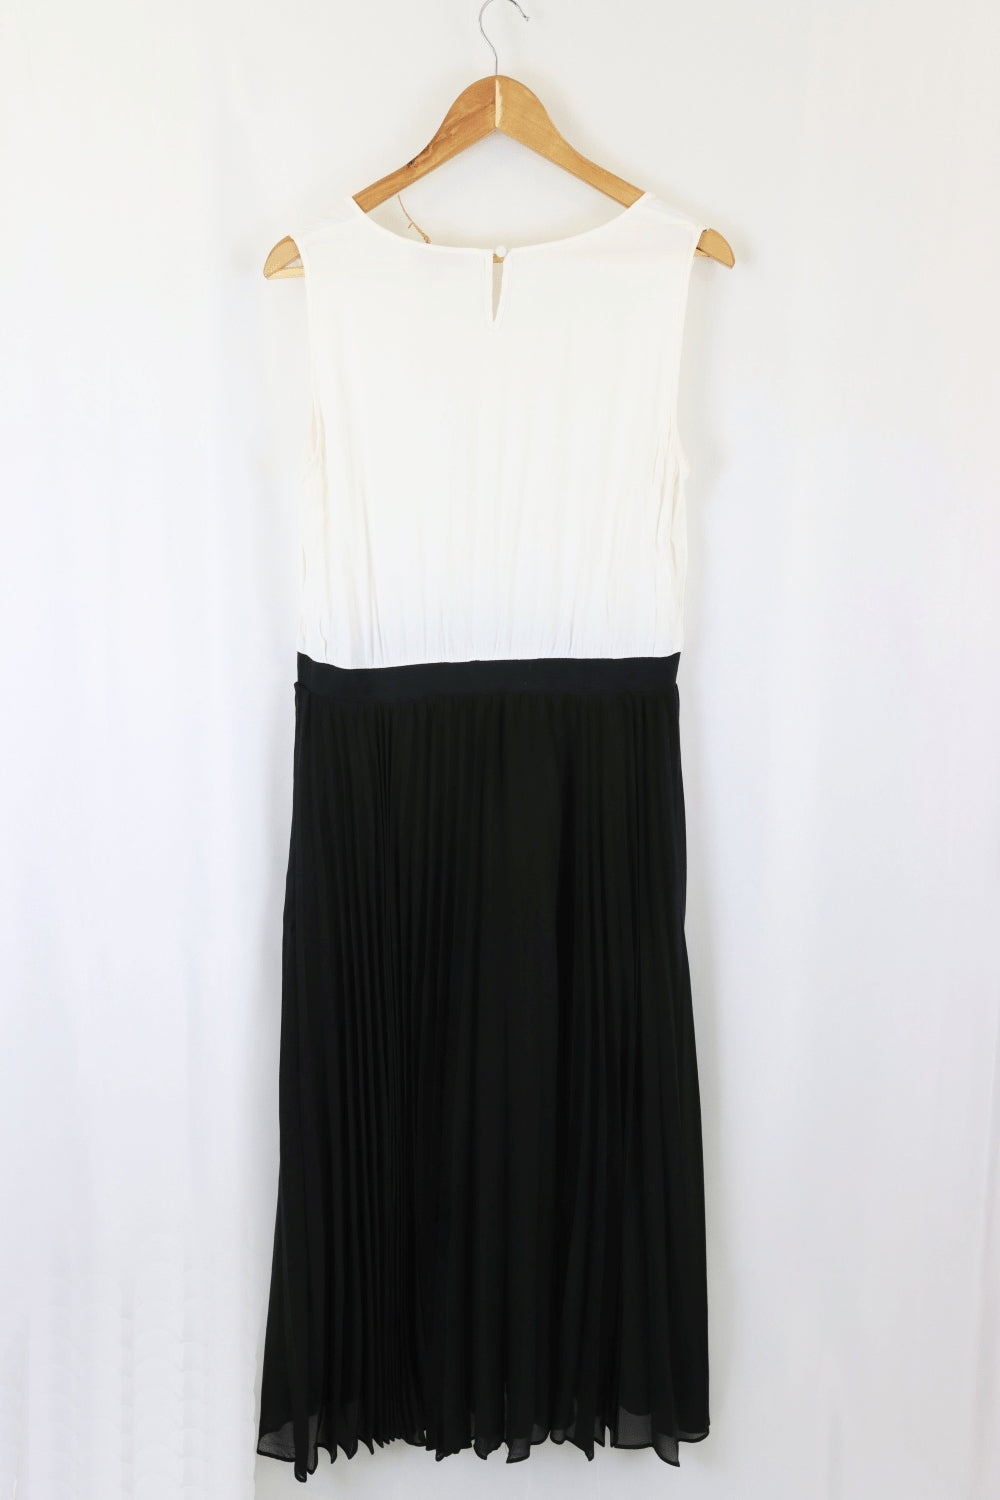 Diana Ferrari  Black And White Dress 12